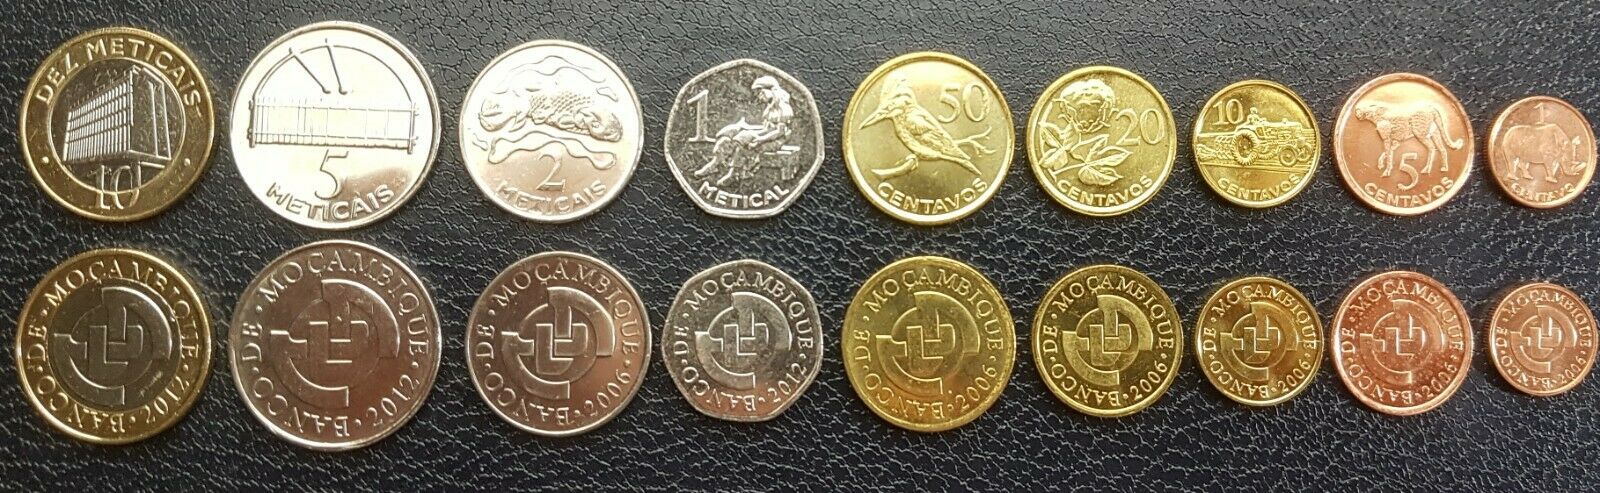 Ecuador coins set of 9 pieces UNC 